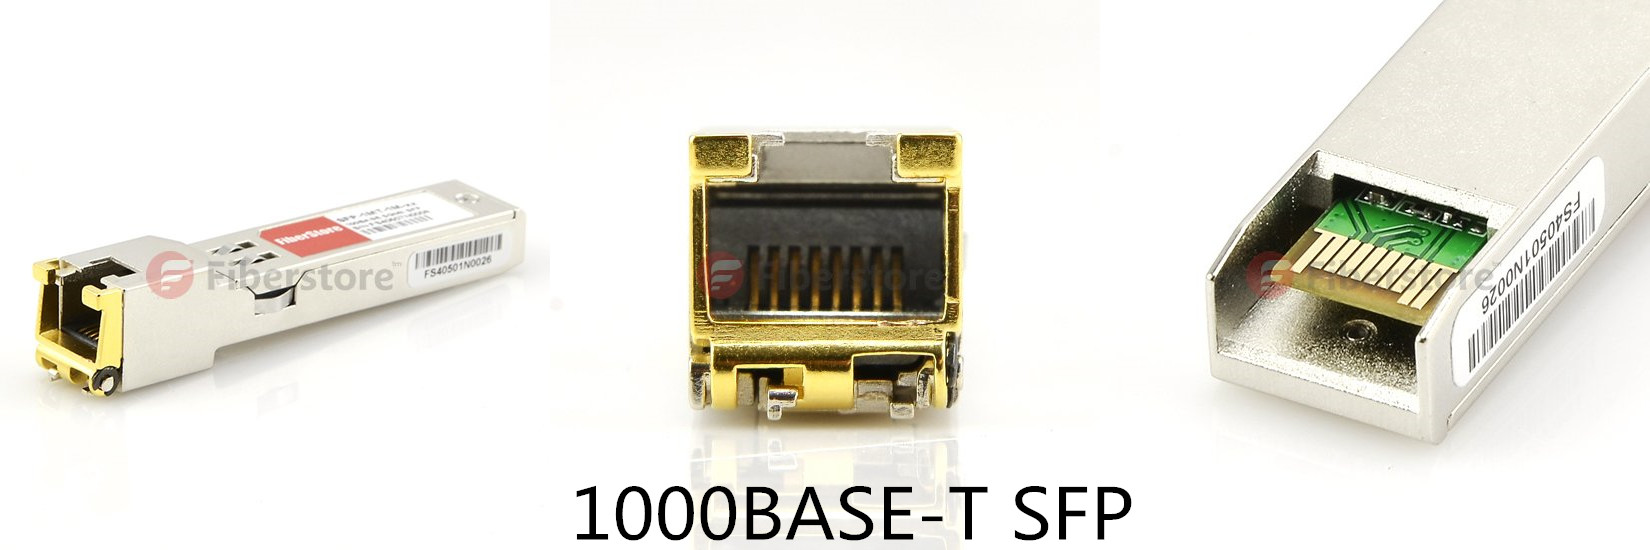 1000BASE-T SFP